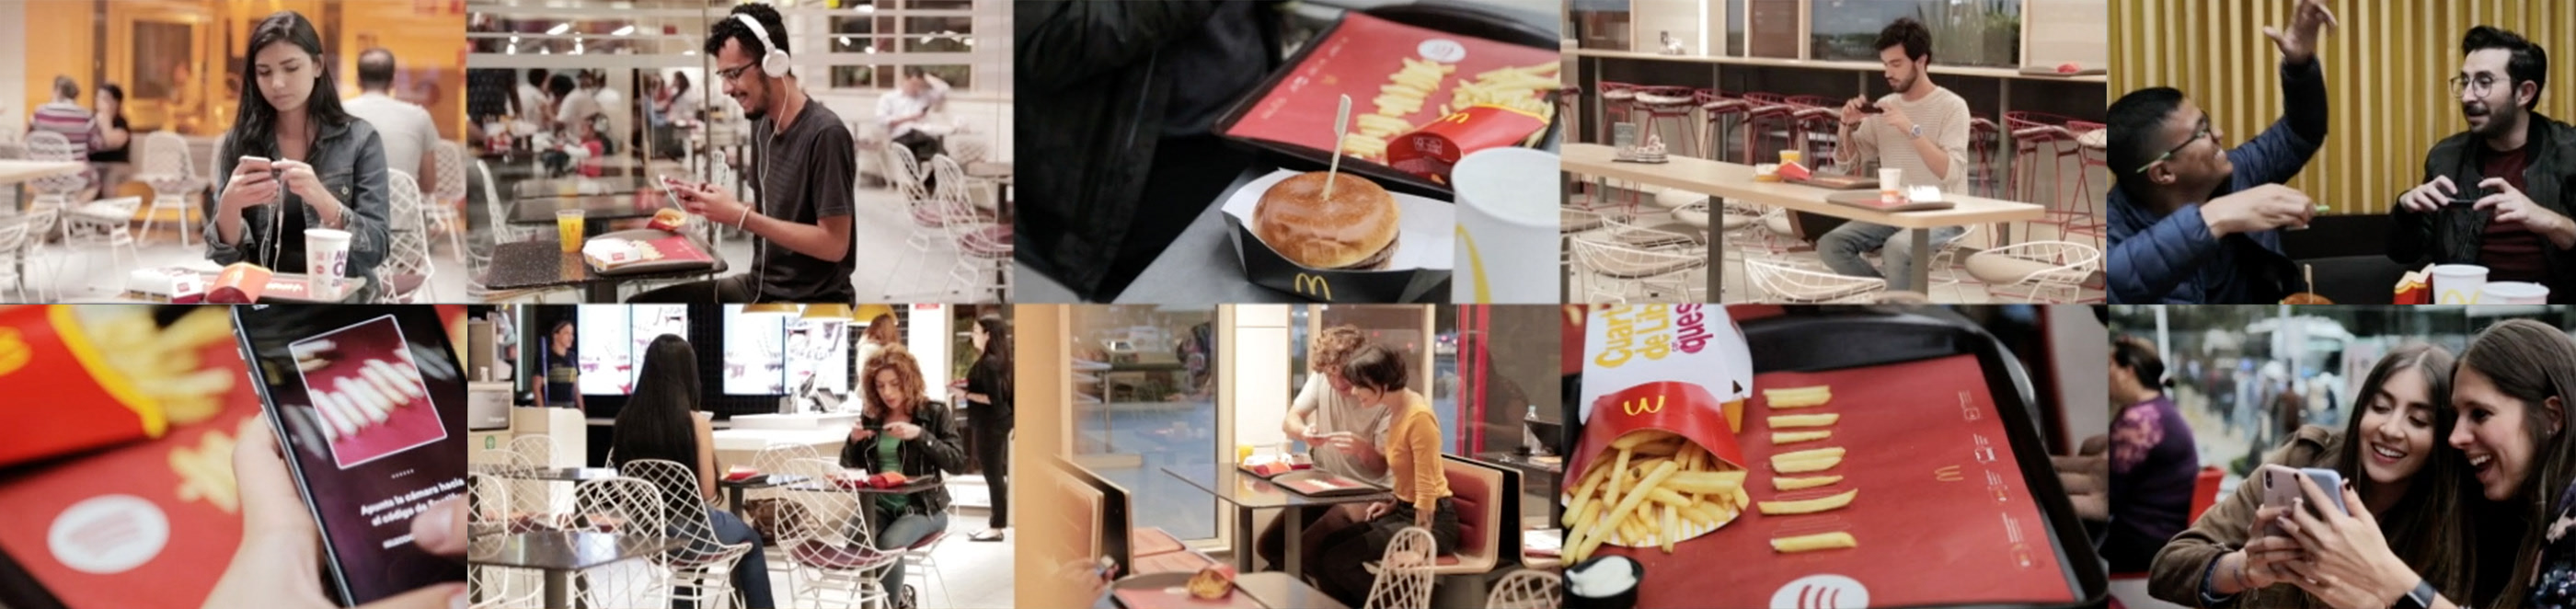 McDonald x Spotify's Frieslist: Transform your fries into music